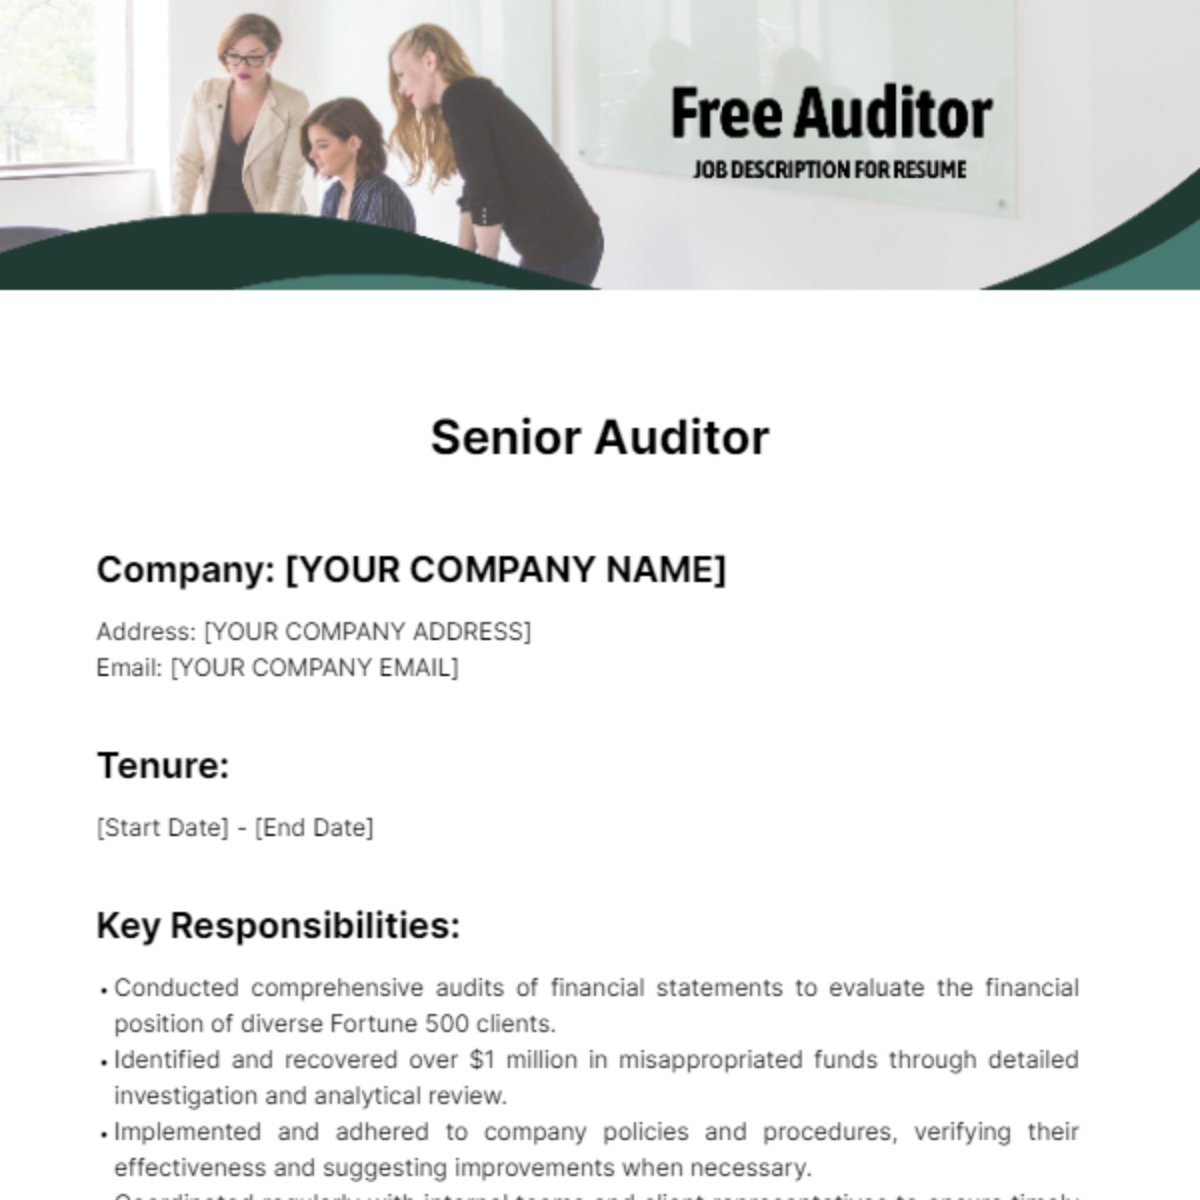 Auditor Job Description for Resume Template